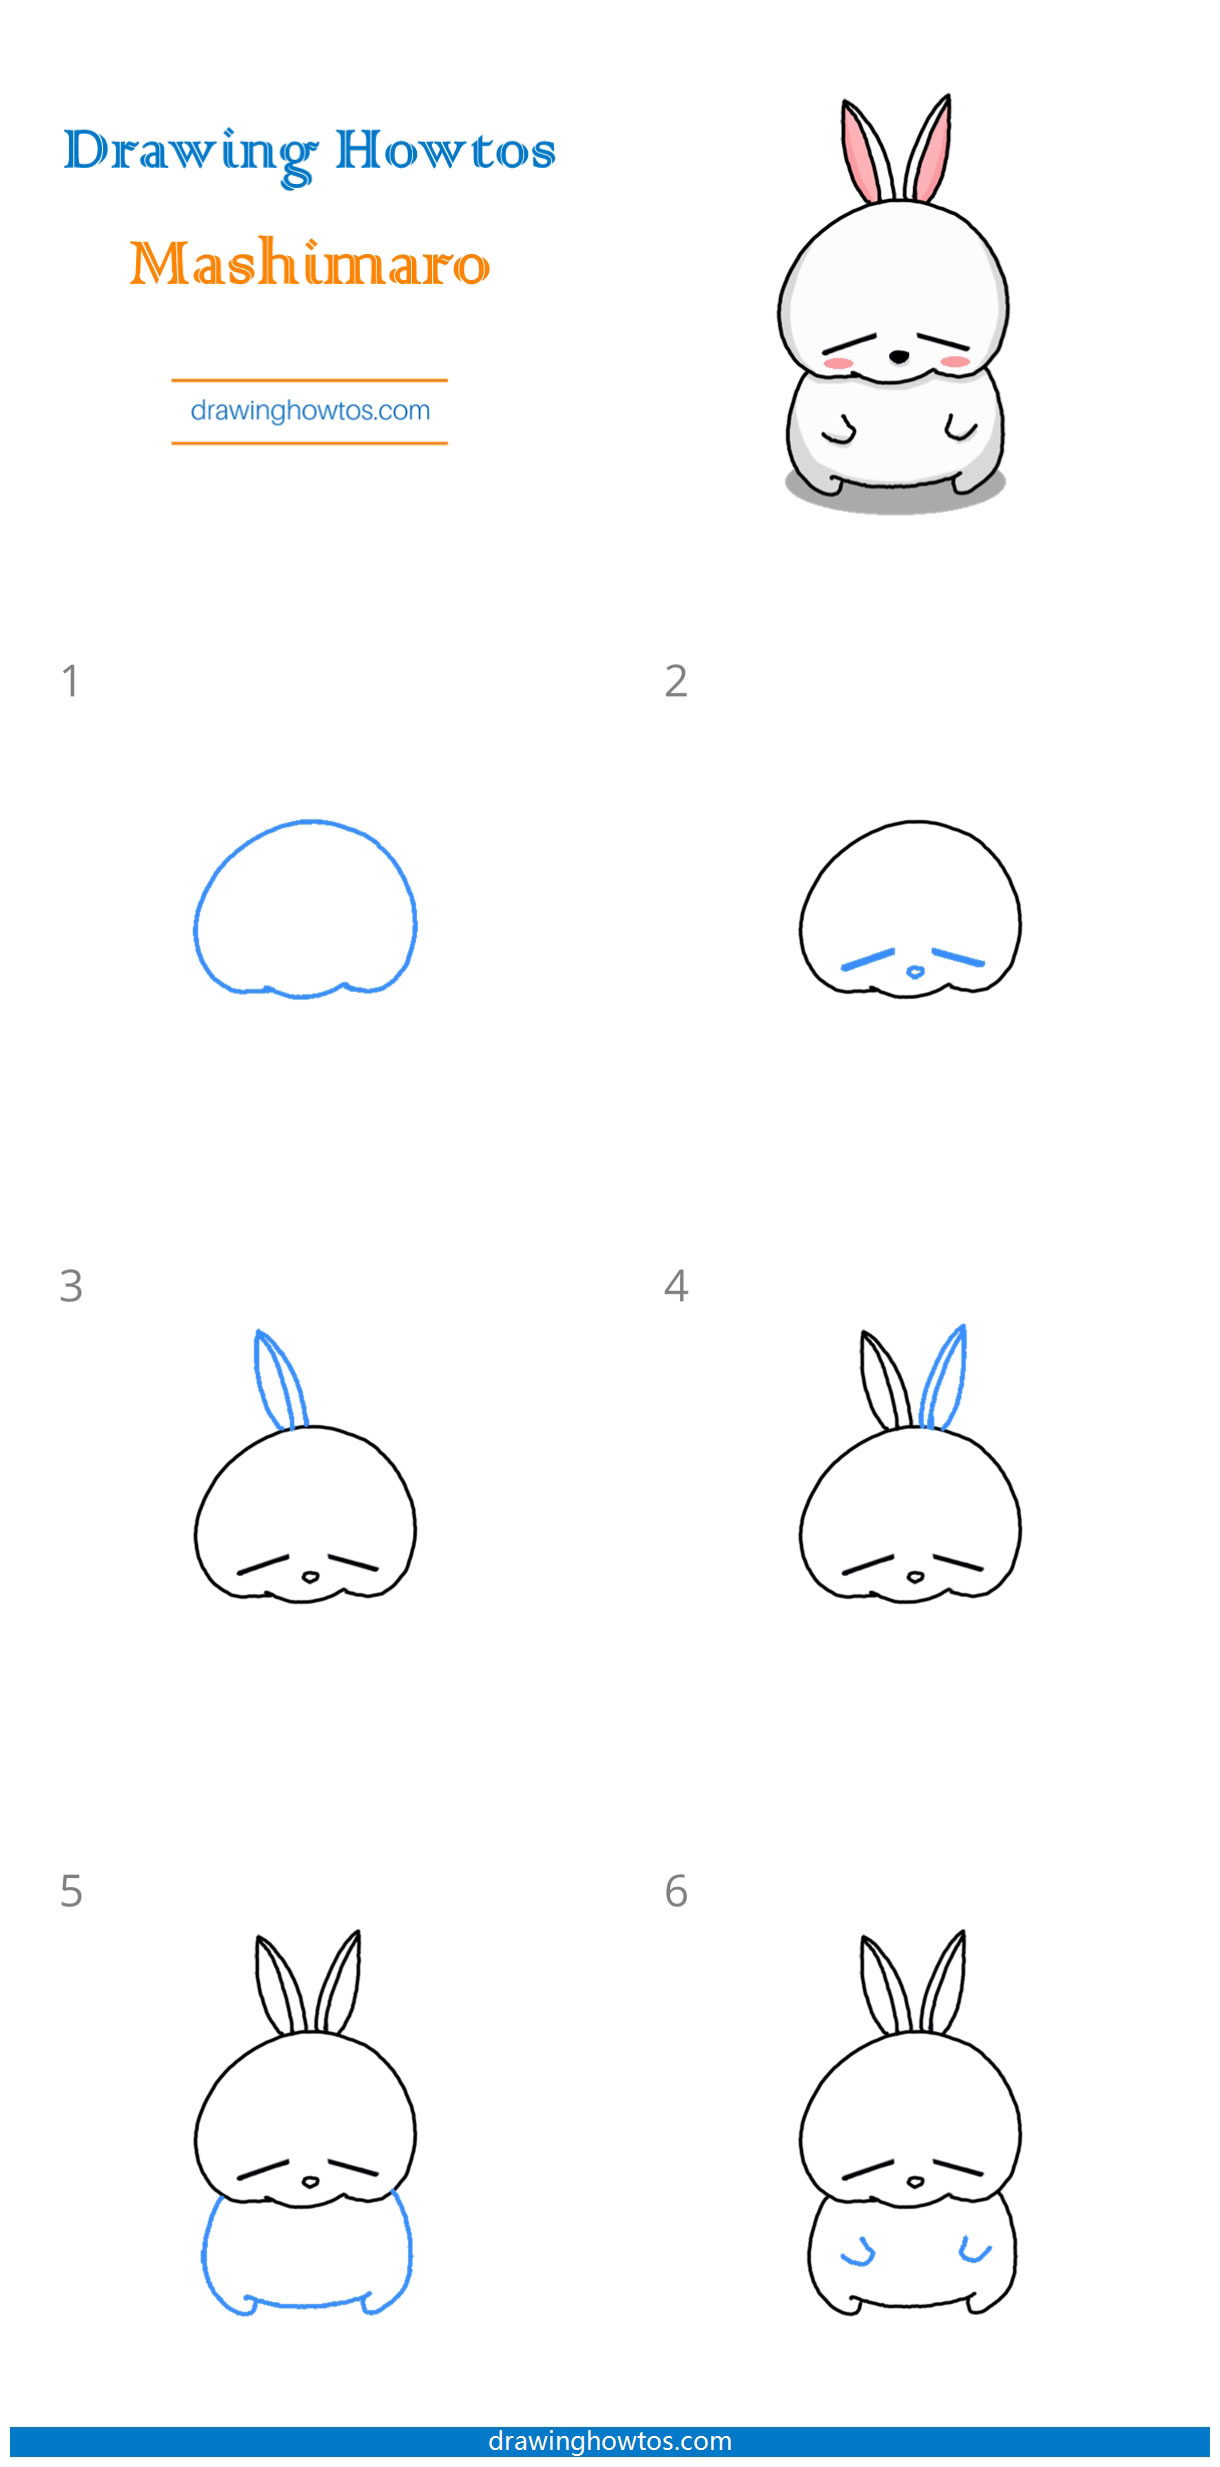 How to Draw Mashimaro Step by Step